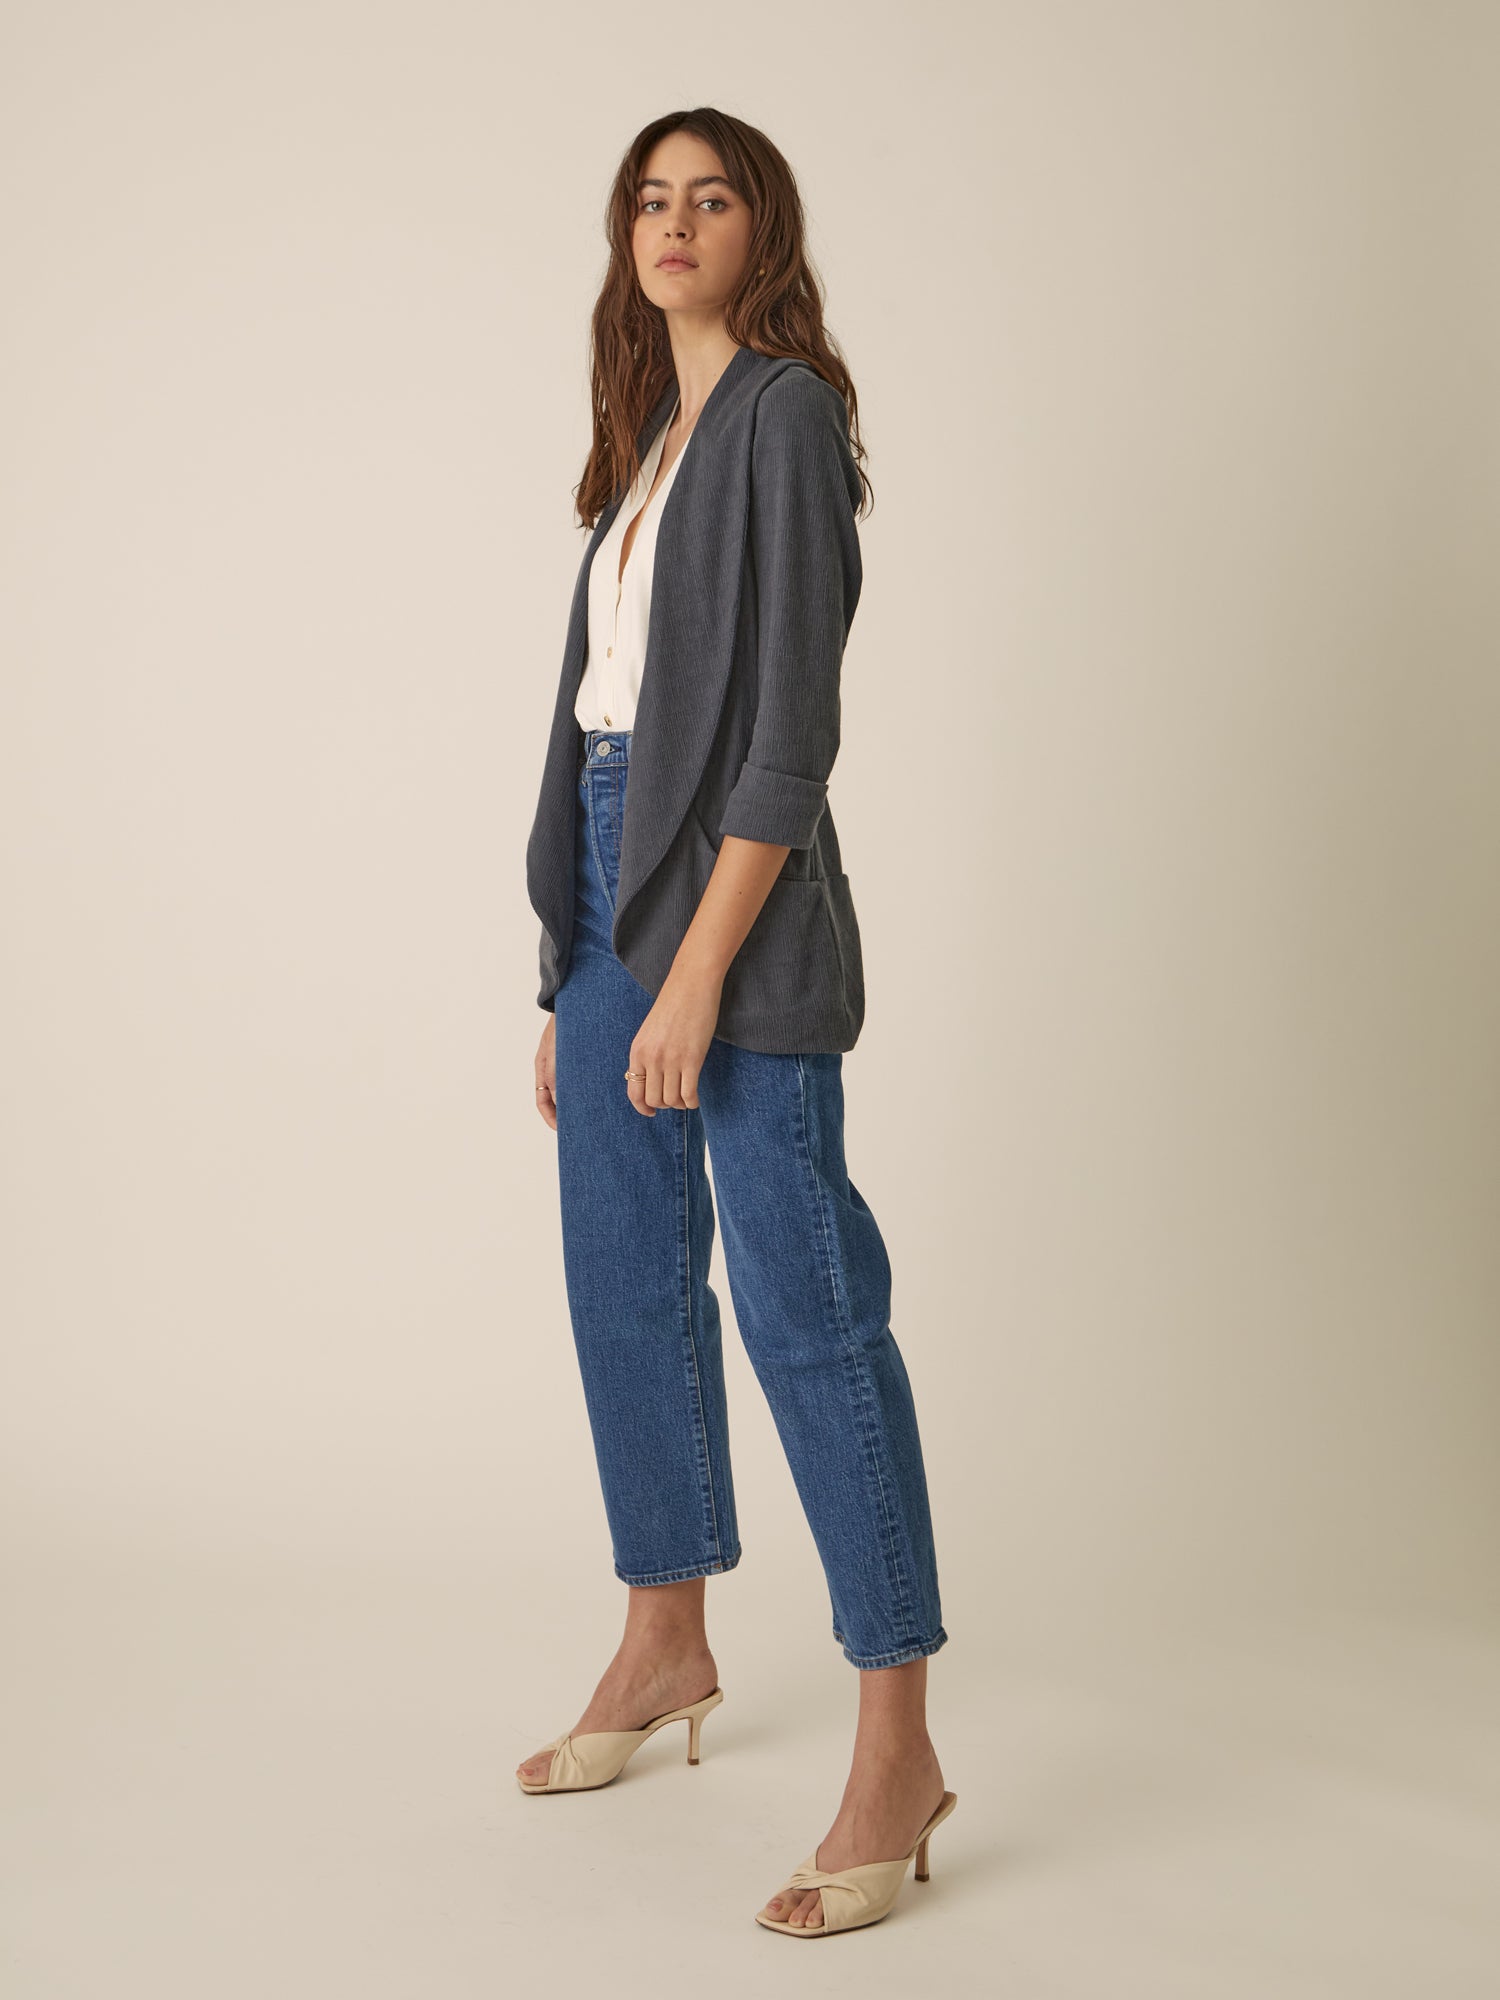 Classic Melanie Shawl Simple Staple Steel Blue Workwear Blazer Jacket Everyday Shawl Front Pockets Best Seller Customer Favorite Casual Style